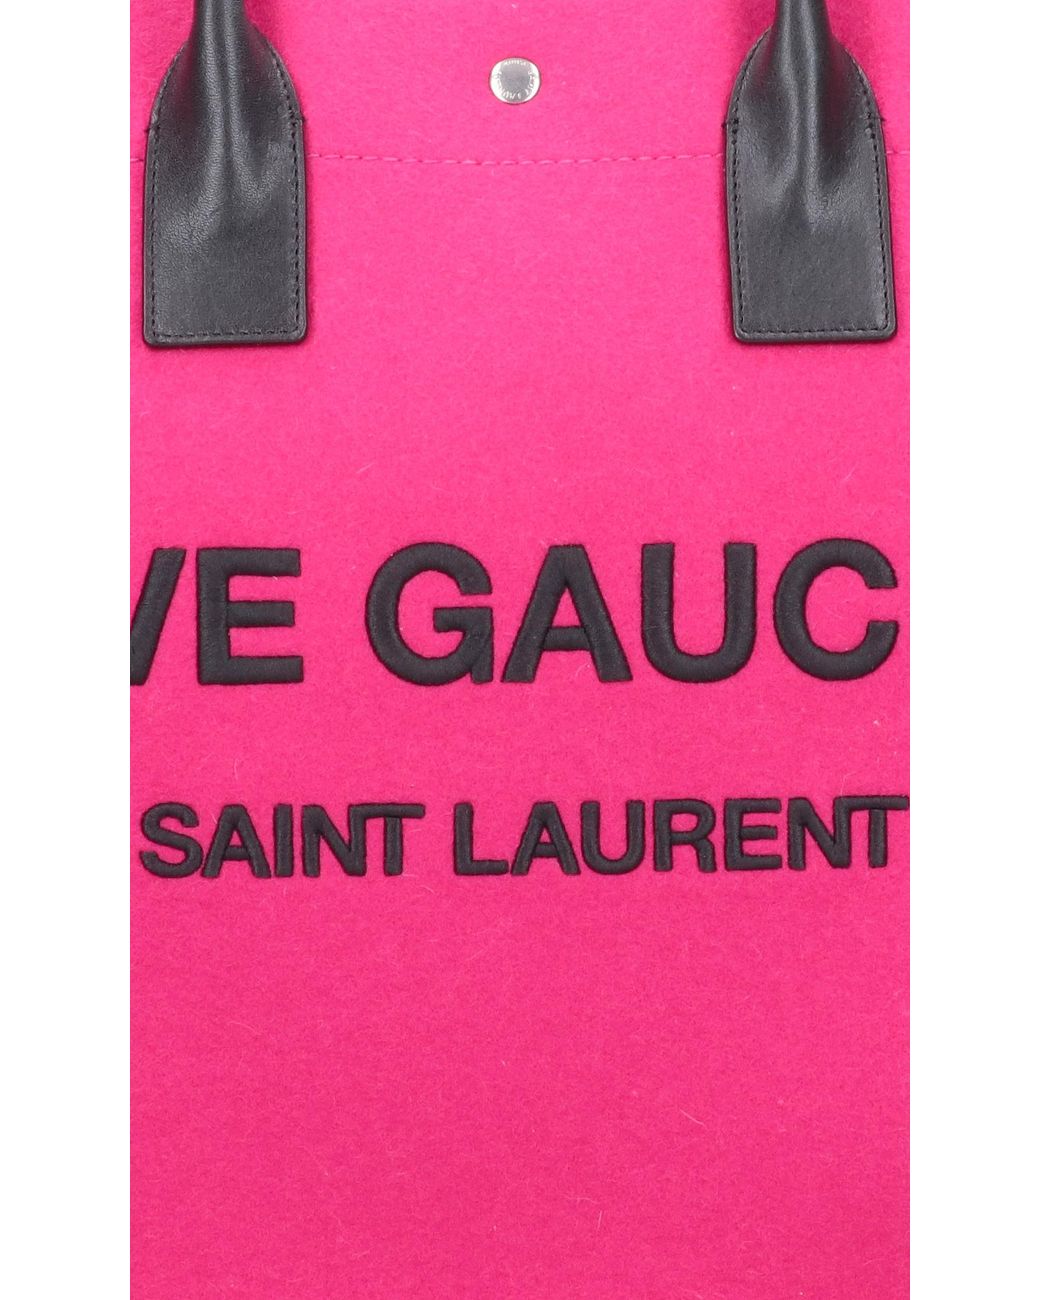 Saint Laurent Cabas Rive Gauche Towel Tote Bag Rose